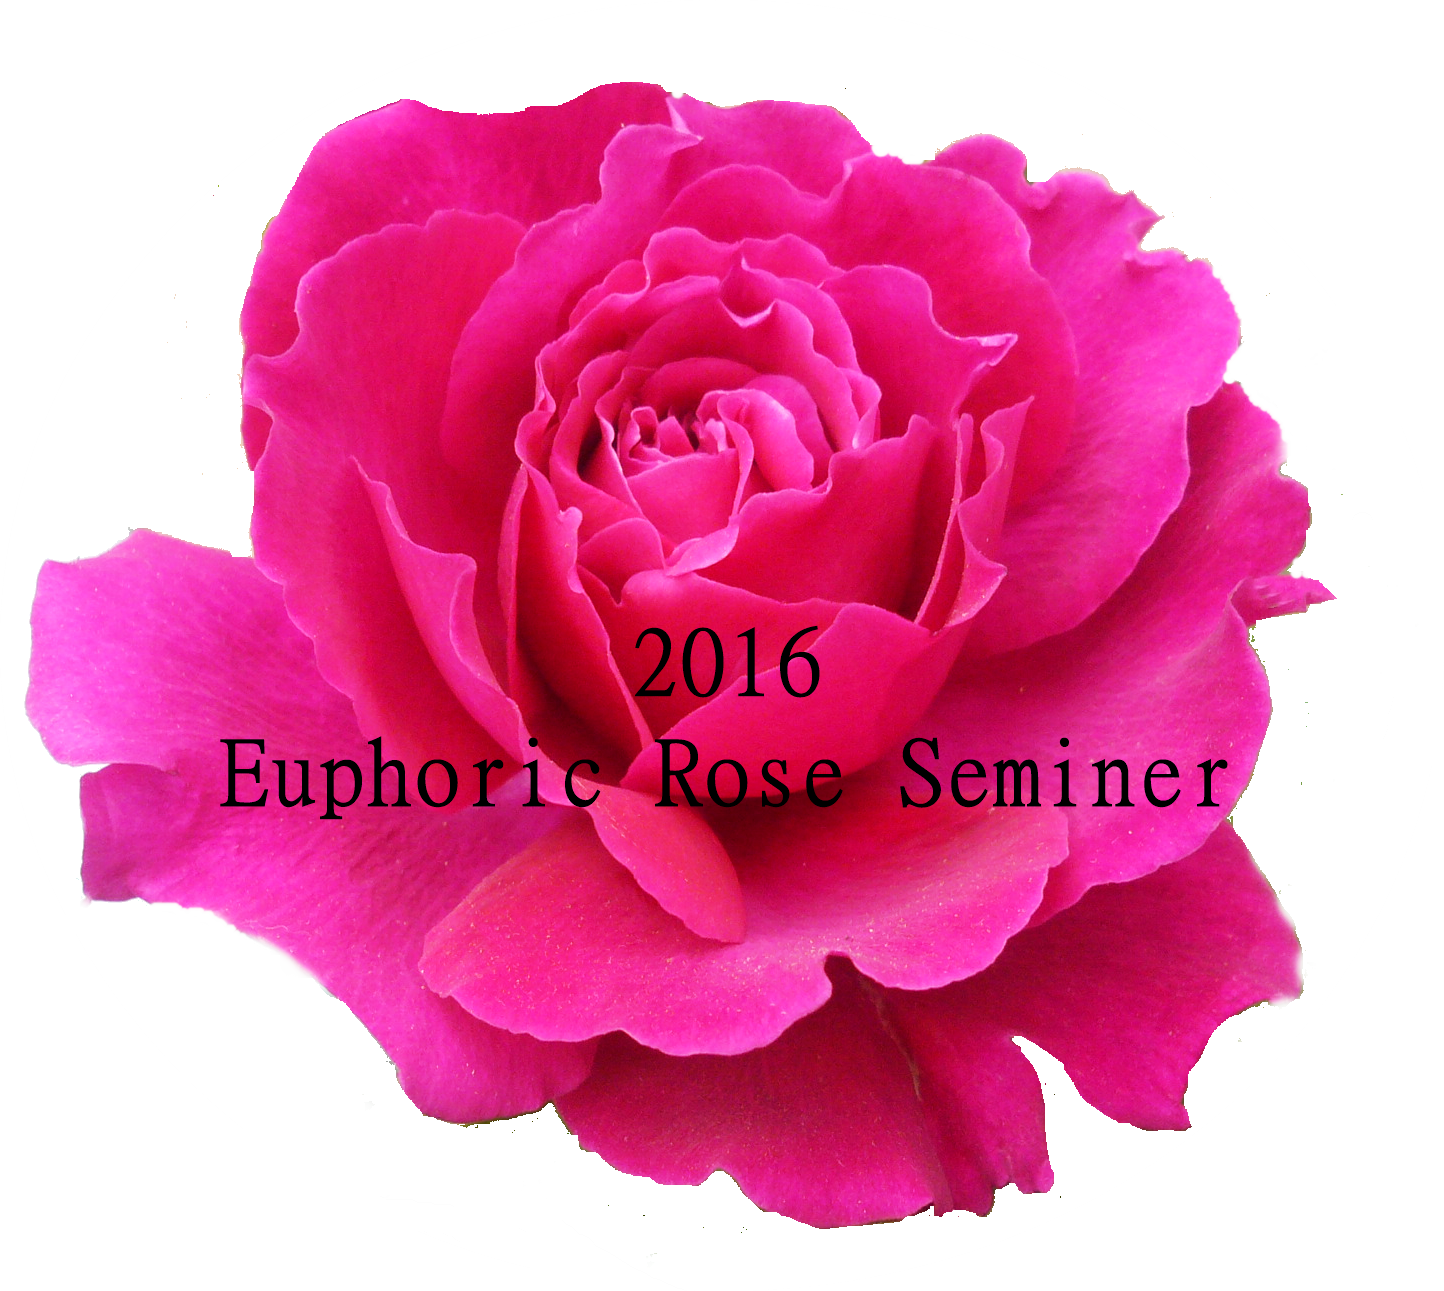 Euphoric Rose seminer